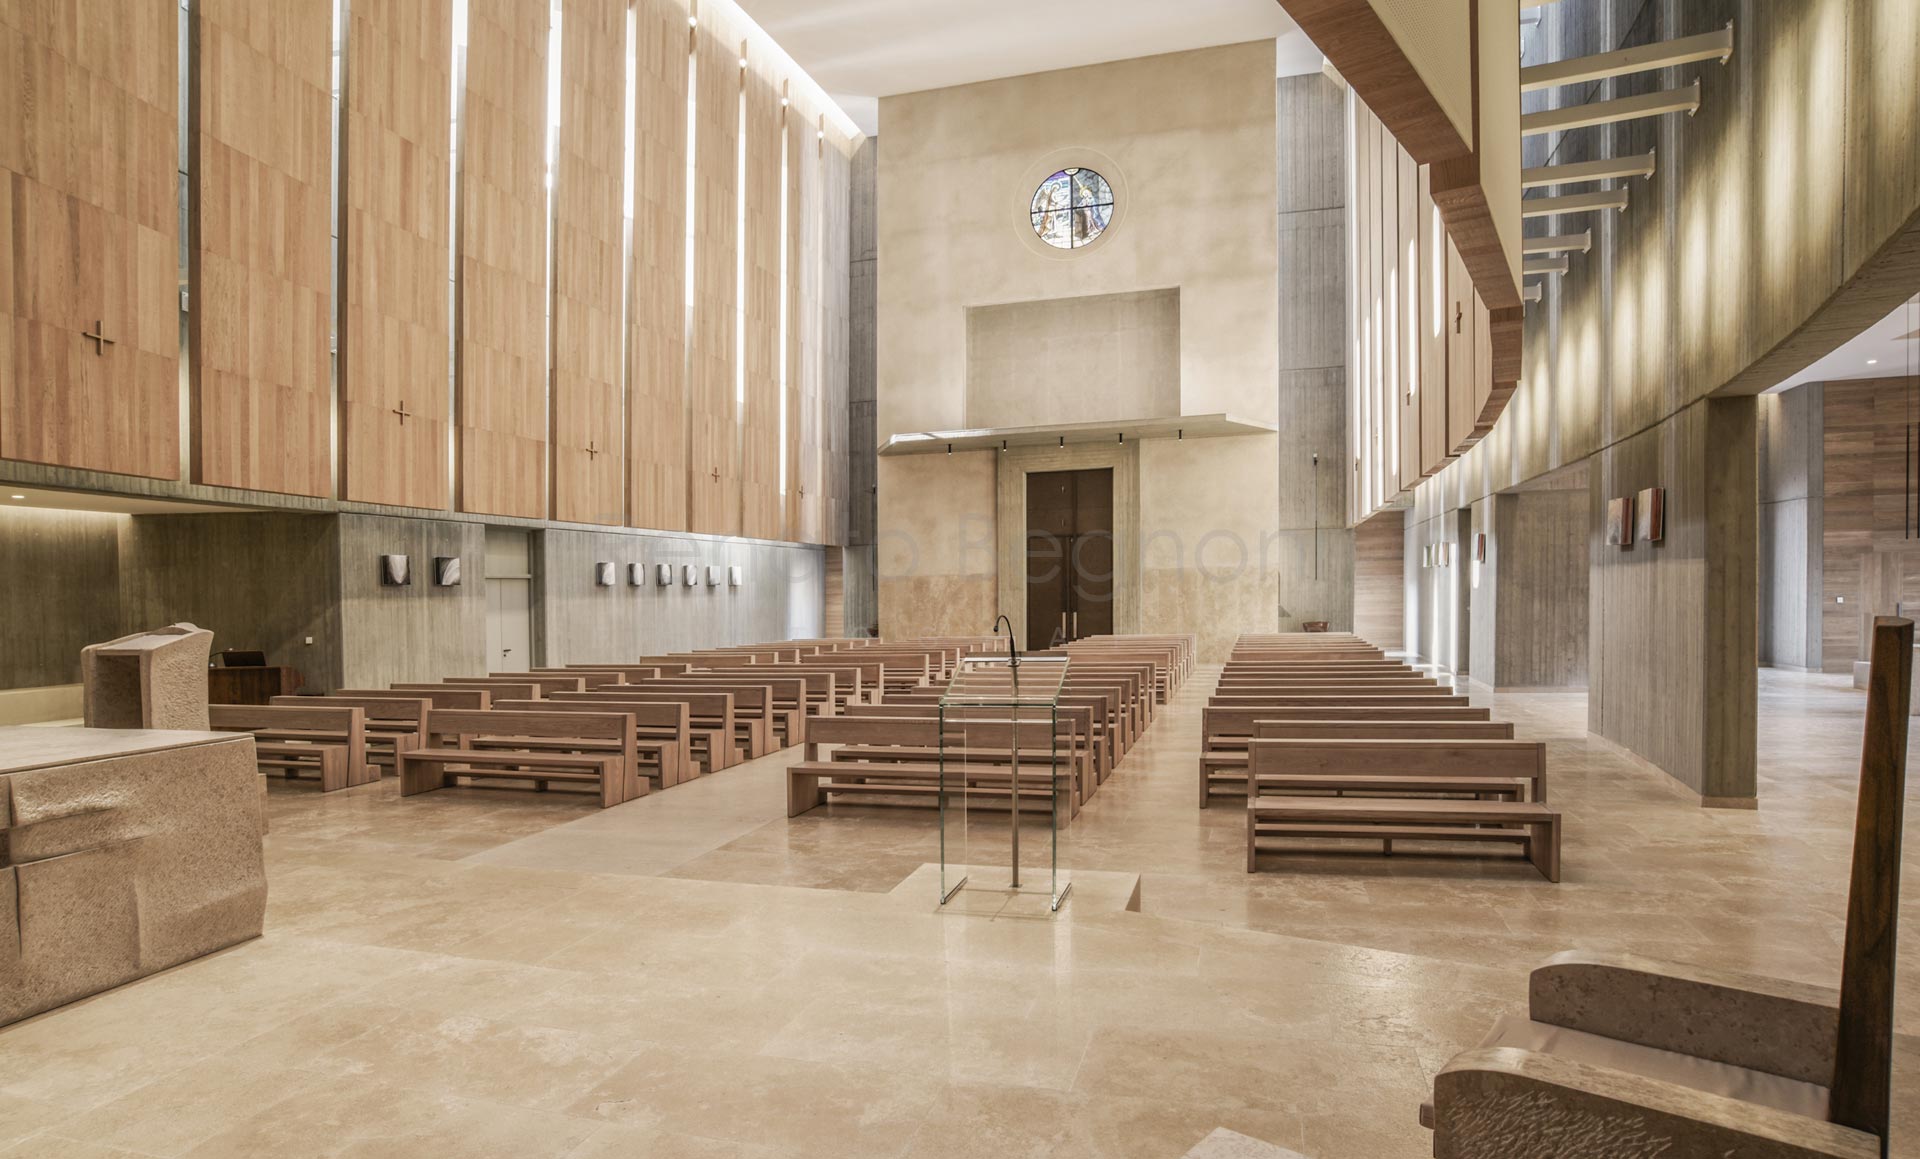 06 - Chiesa Borgonuovo - Architettura - 2019